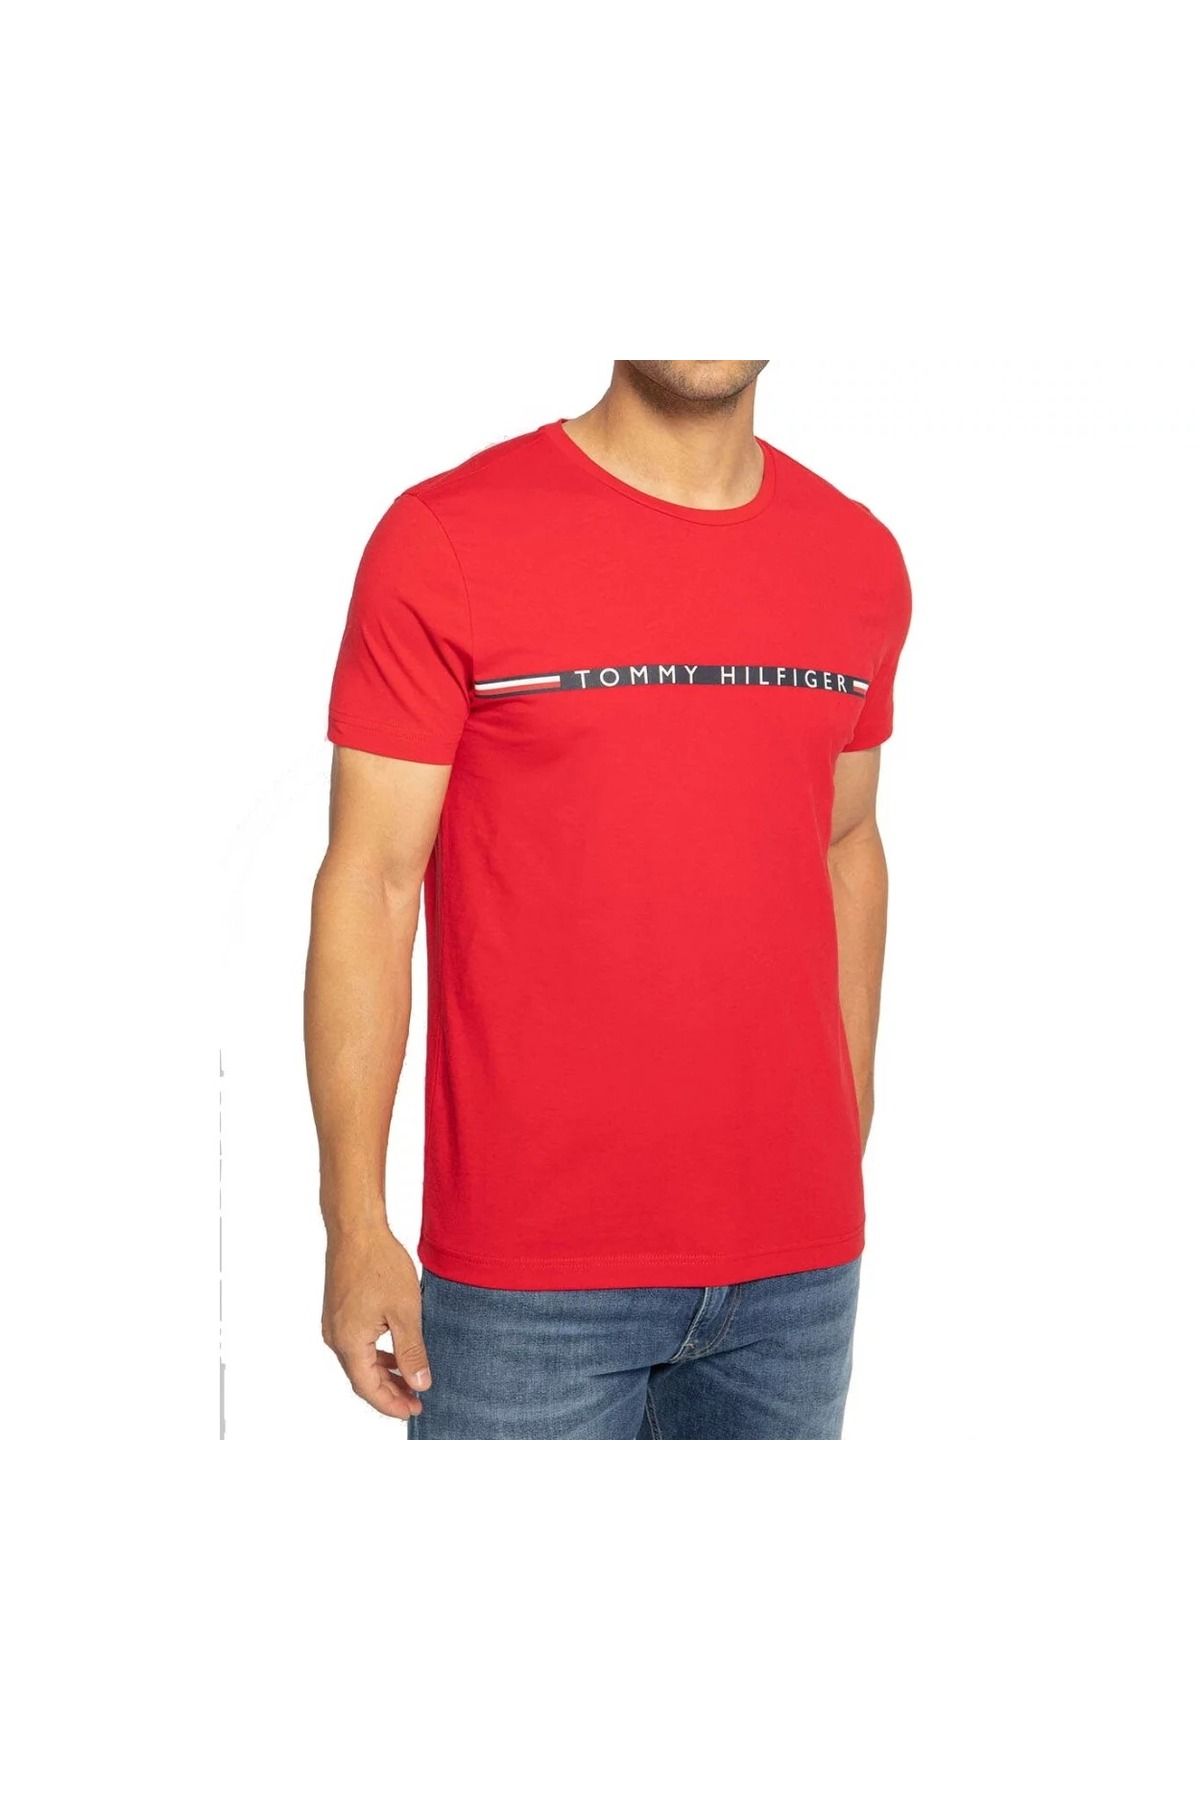 Tommy Hilfiger Red Man T-shirt